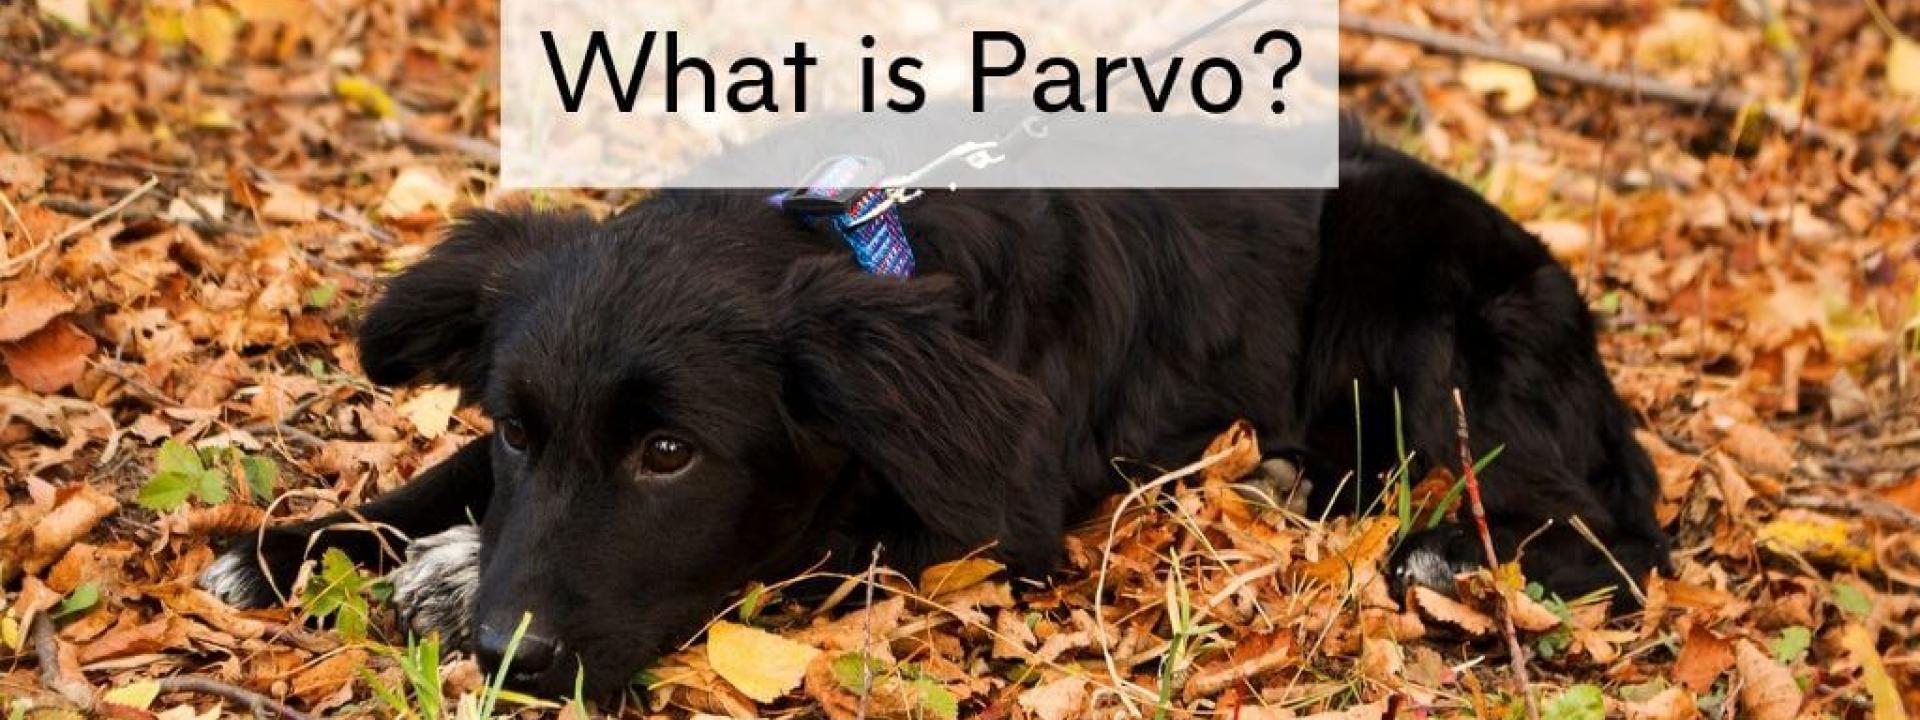 what-is-parvo-blog-header.jpg